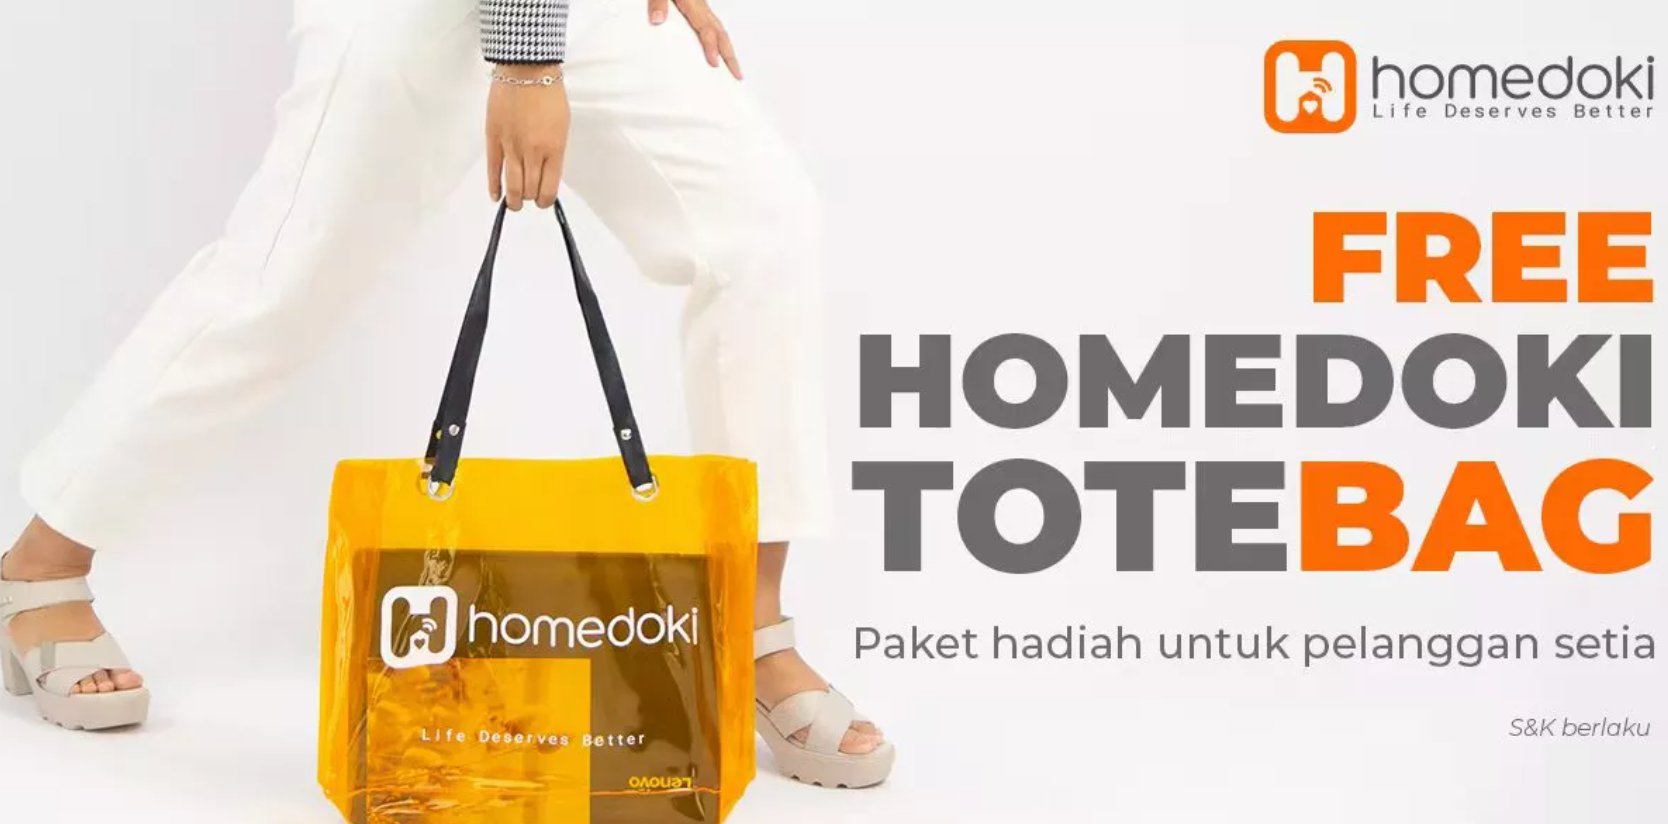 Homedoki Indonesia Raises The Bar Through Birthday Appreciation Program For All Customer